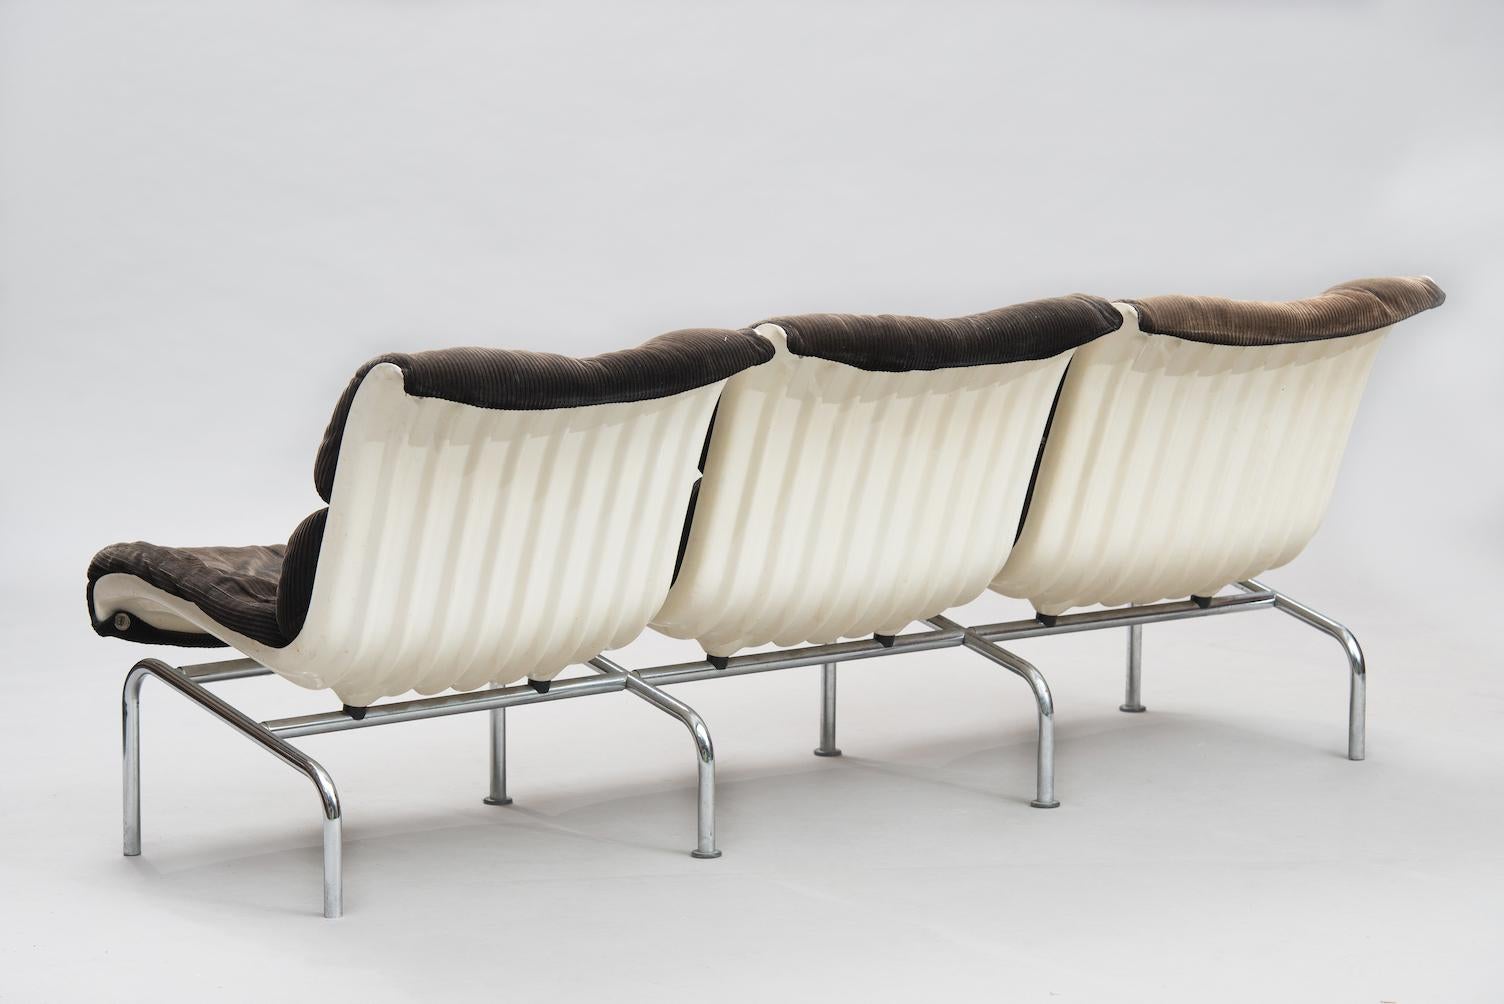 Finnish Yrjö Kukkapuro mid-century modern Set of Sofas for Haimi, 1960s. For Sale